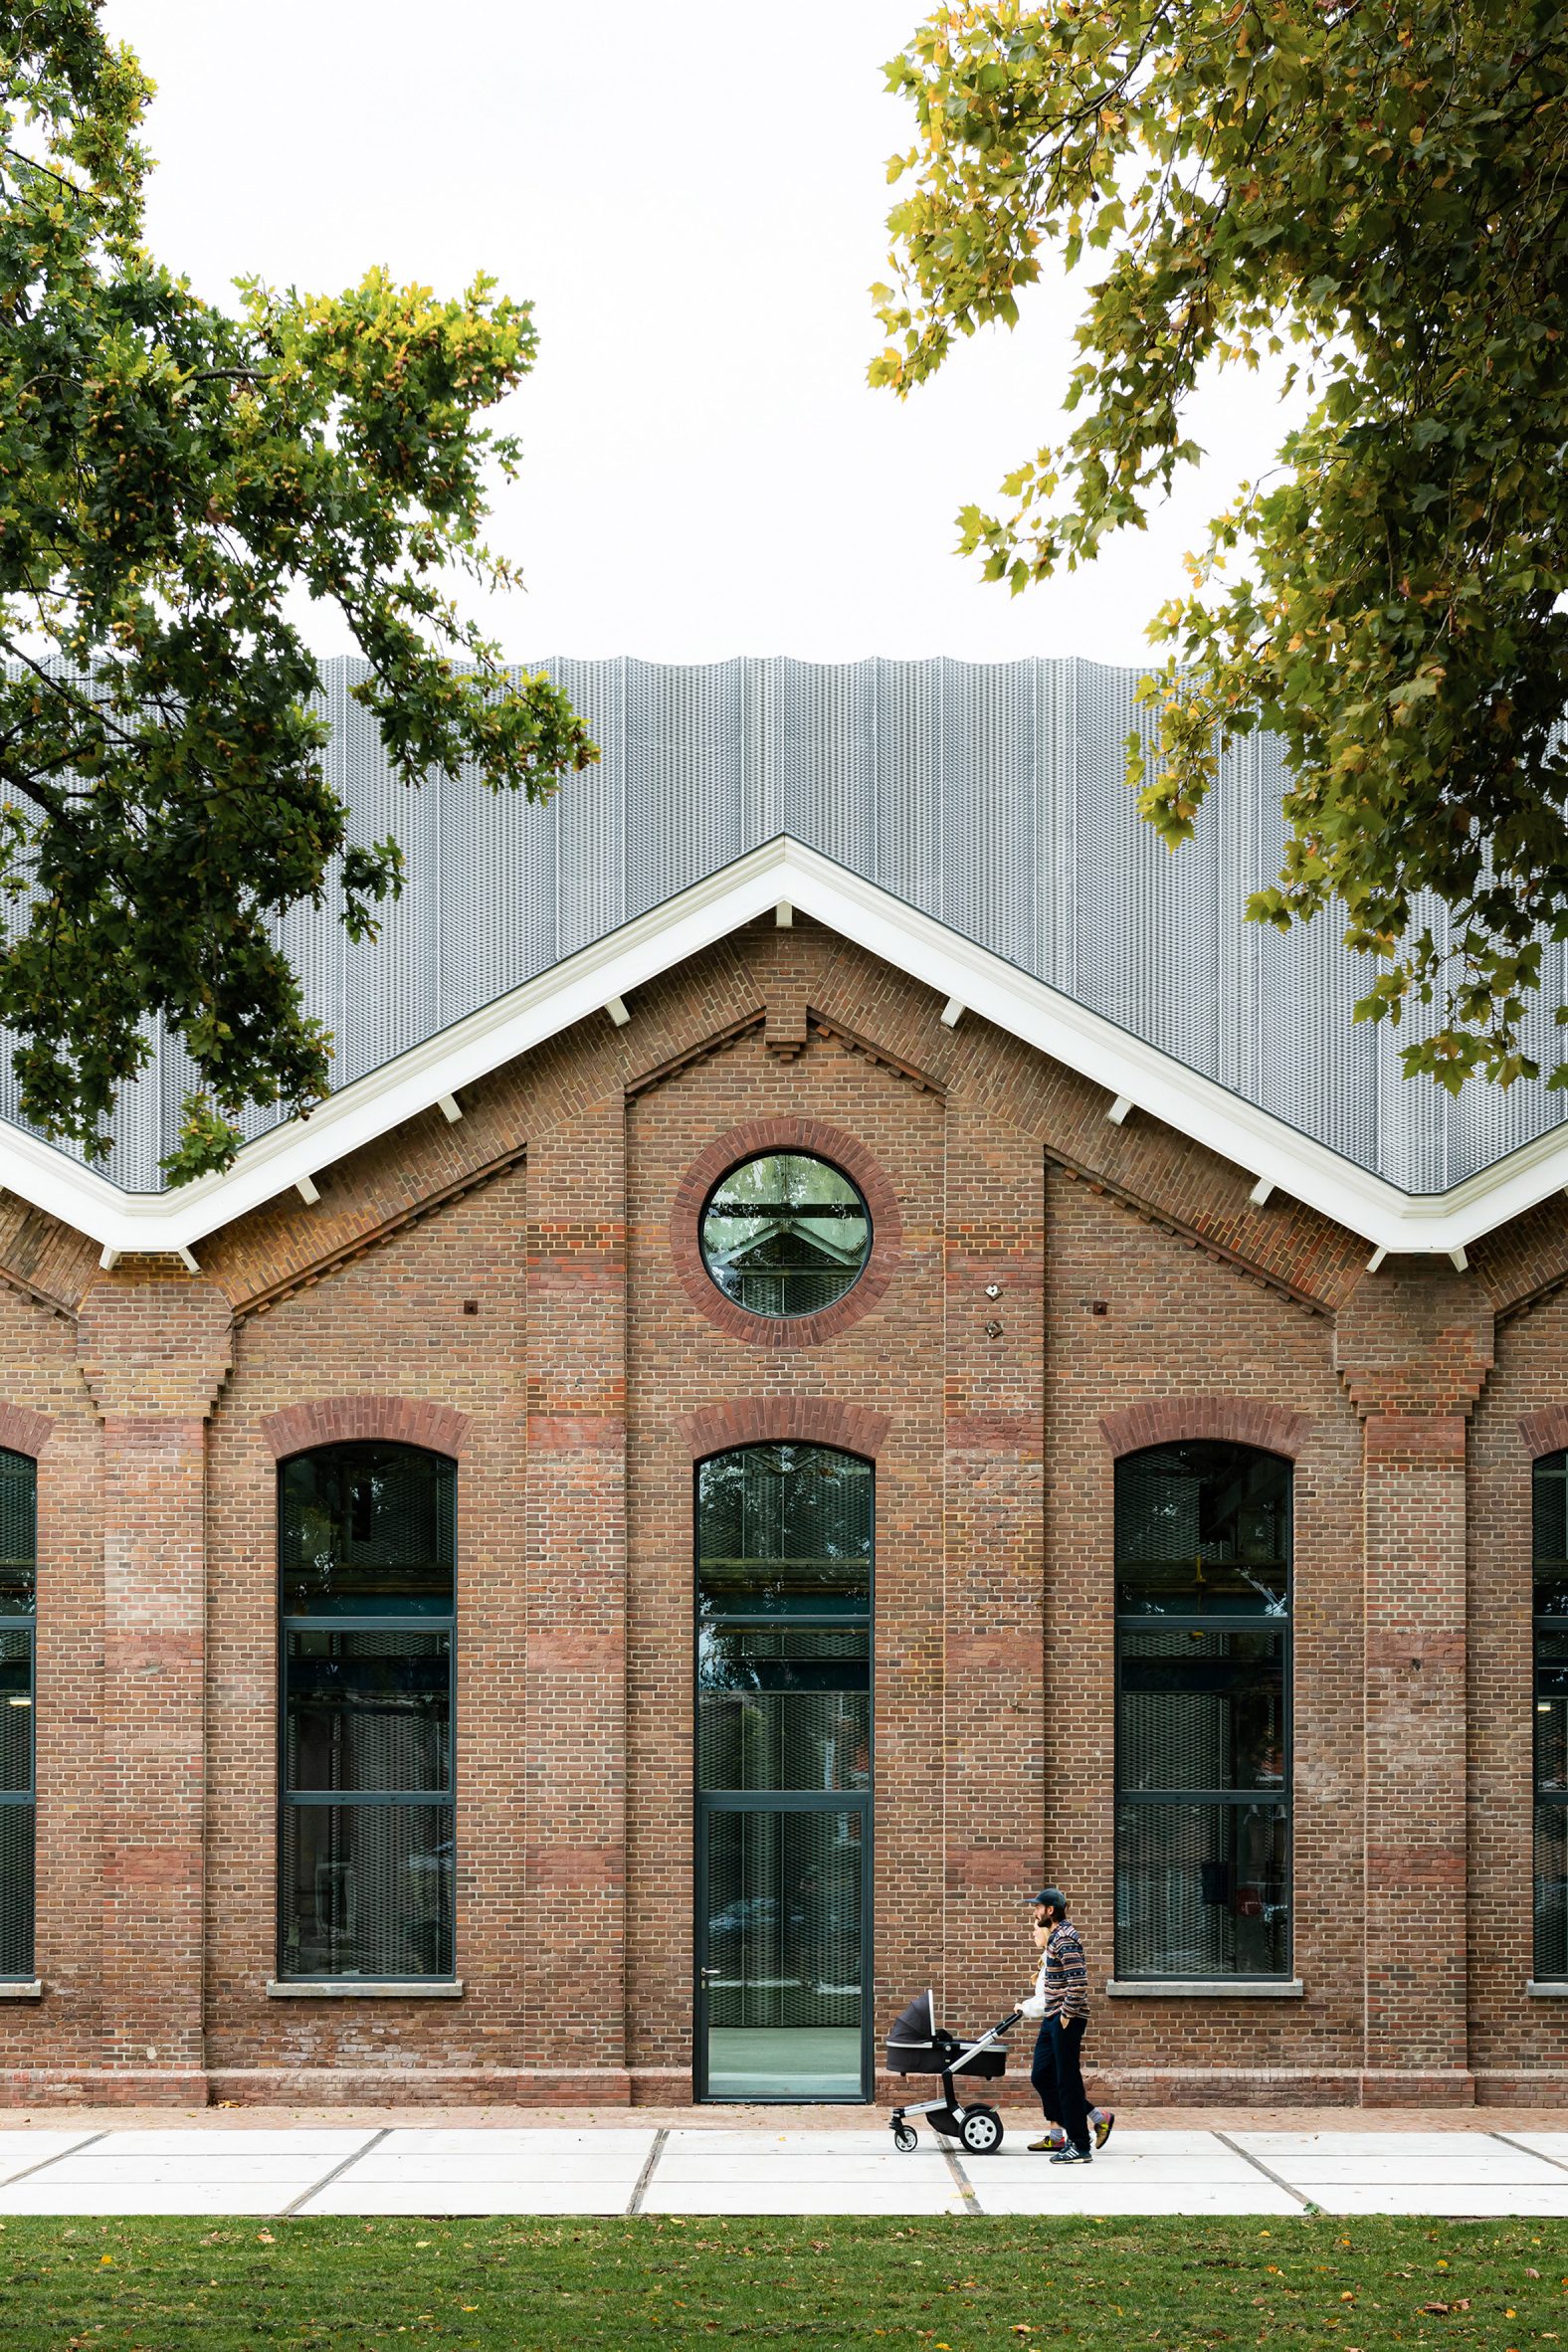 Exterior of Bovenbouwwerkplaats community hub by Studioninedots